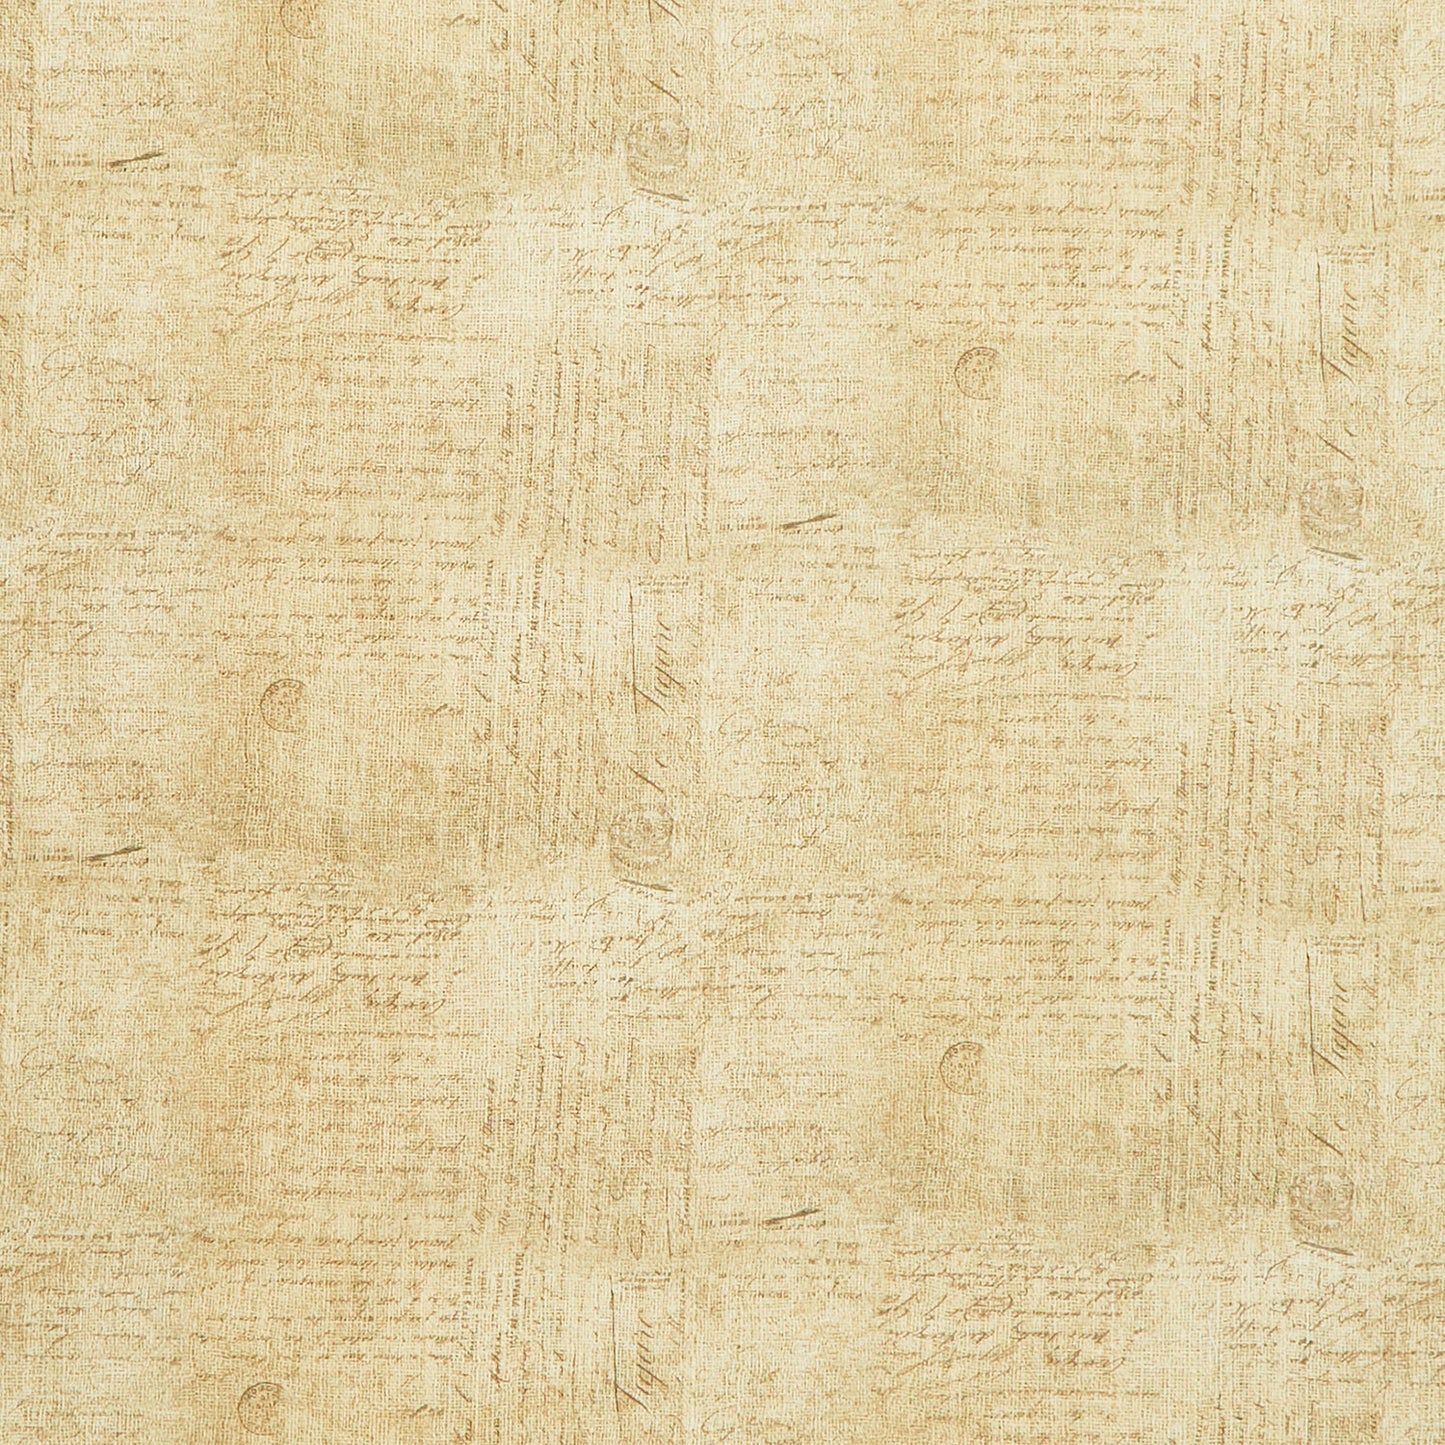 Lemon Bouquet - Handwriting Text On Woven Texture Burlap Yardage Primary Image